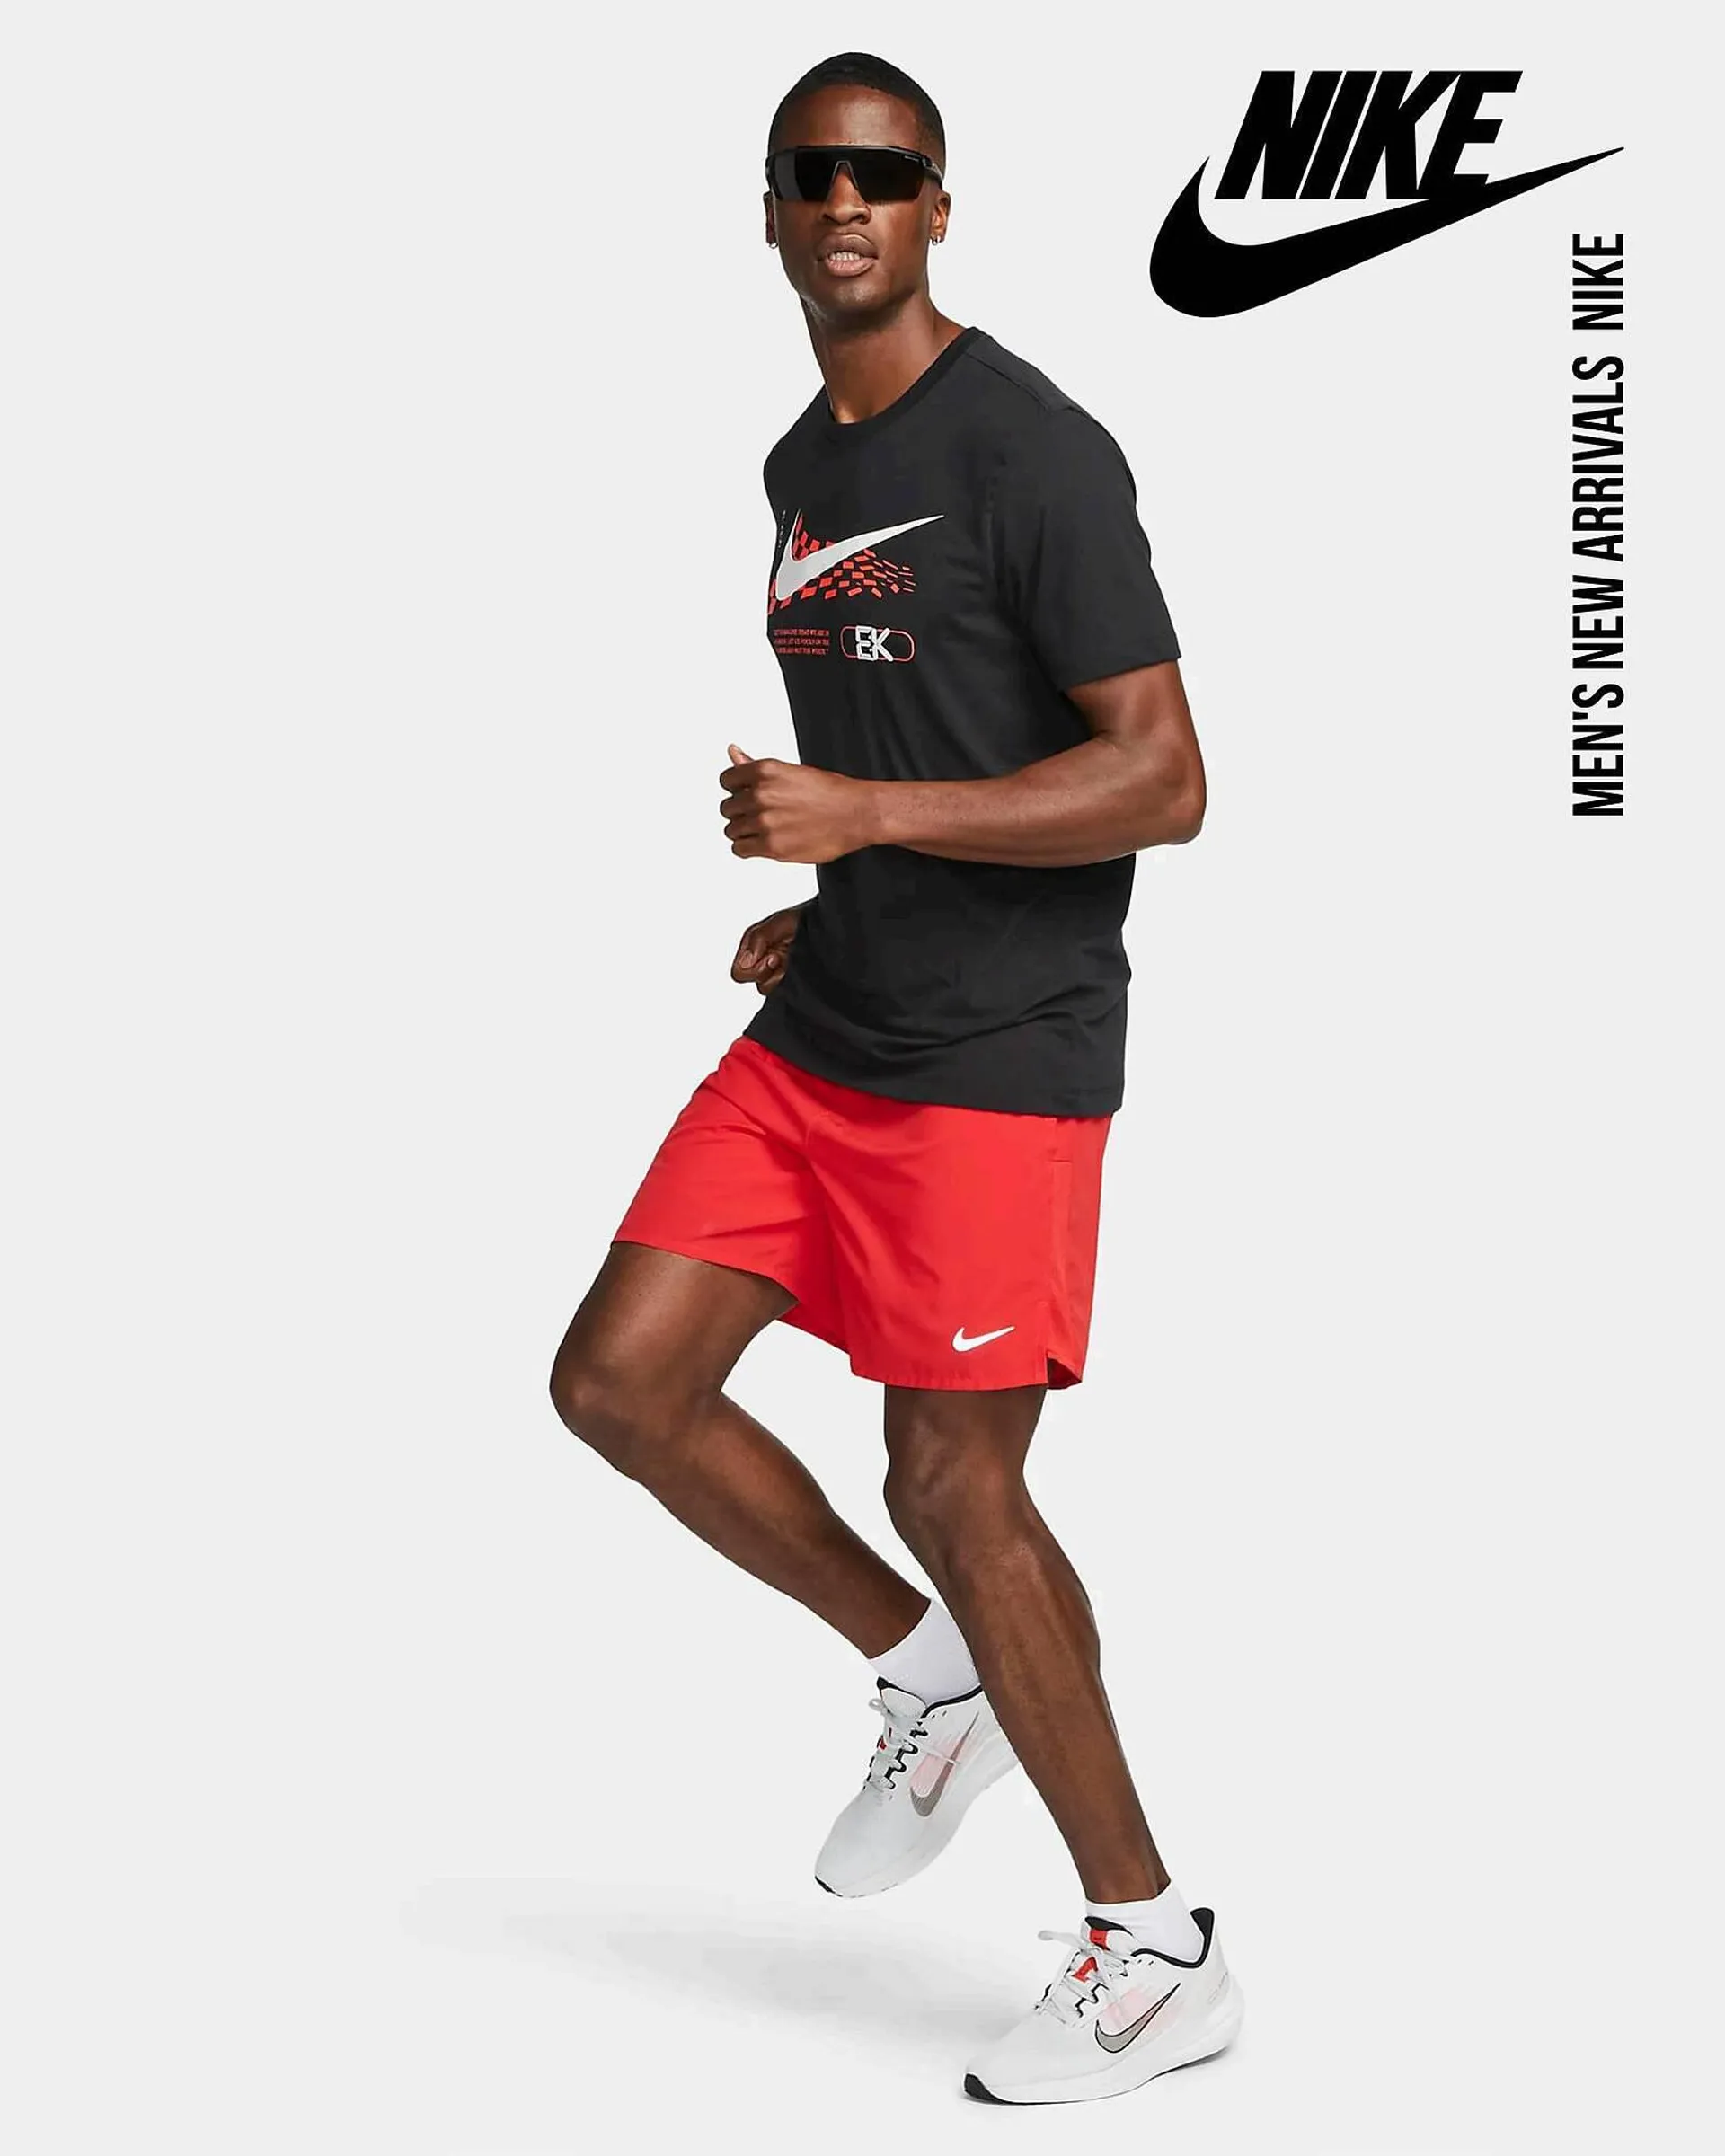 Nike catalogue